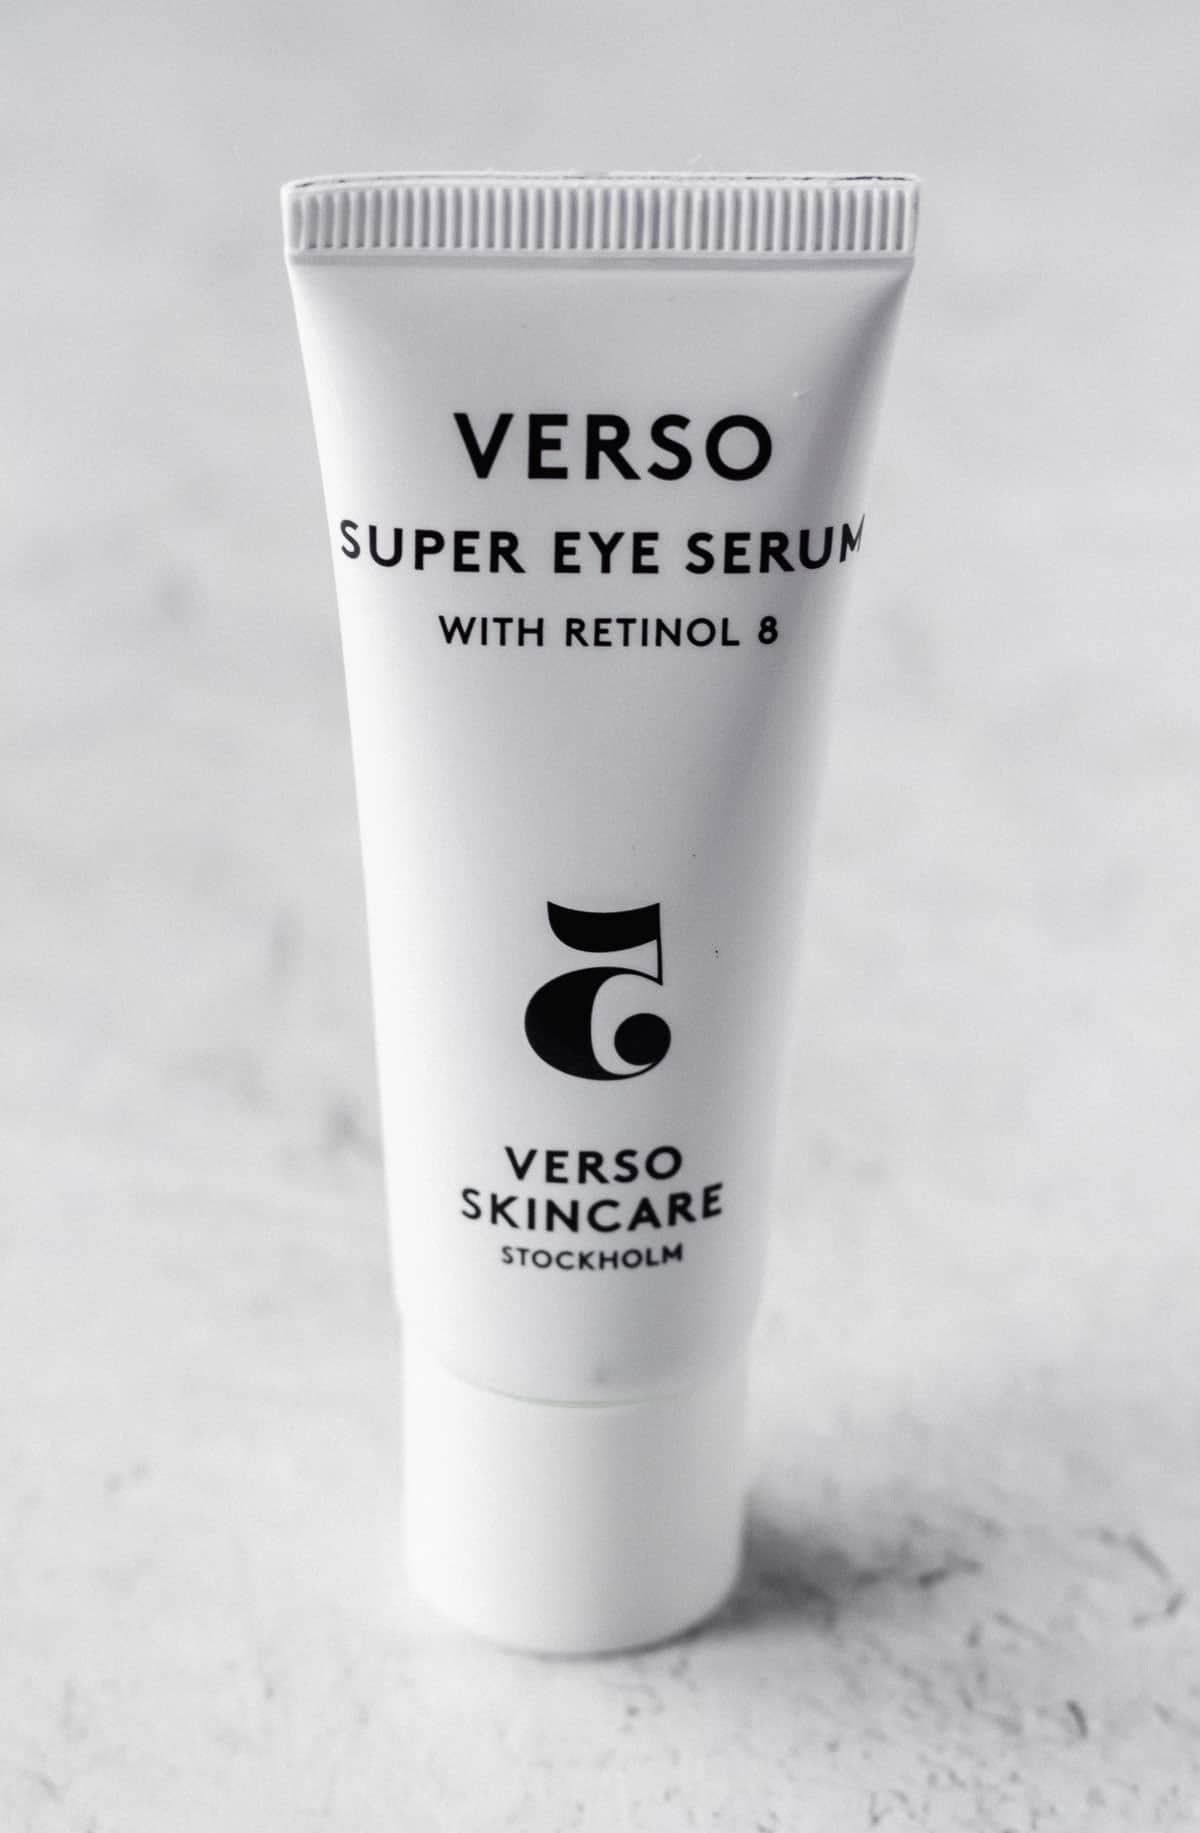 Verso Super Eye Serum with Retinol 8 tube on a white background